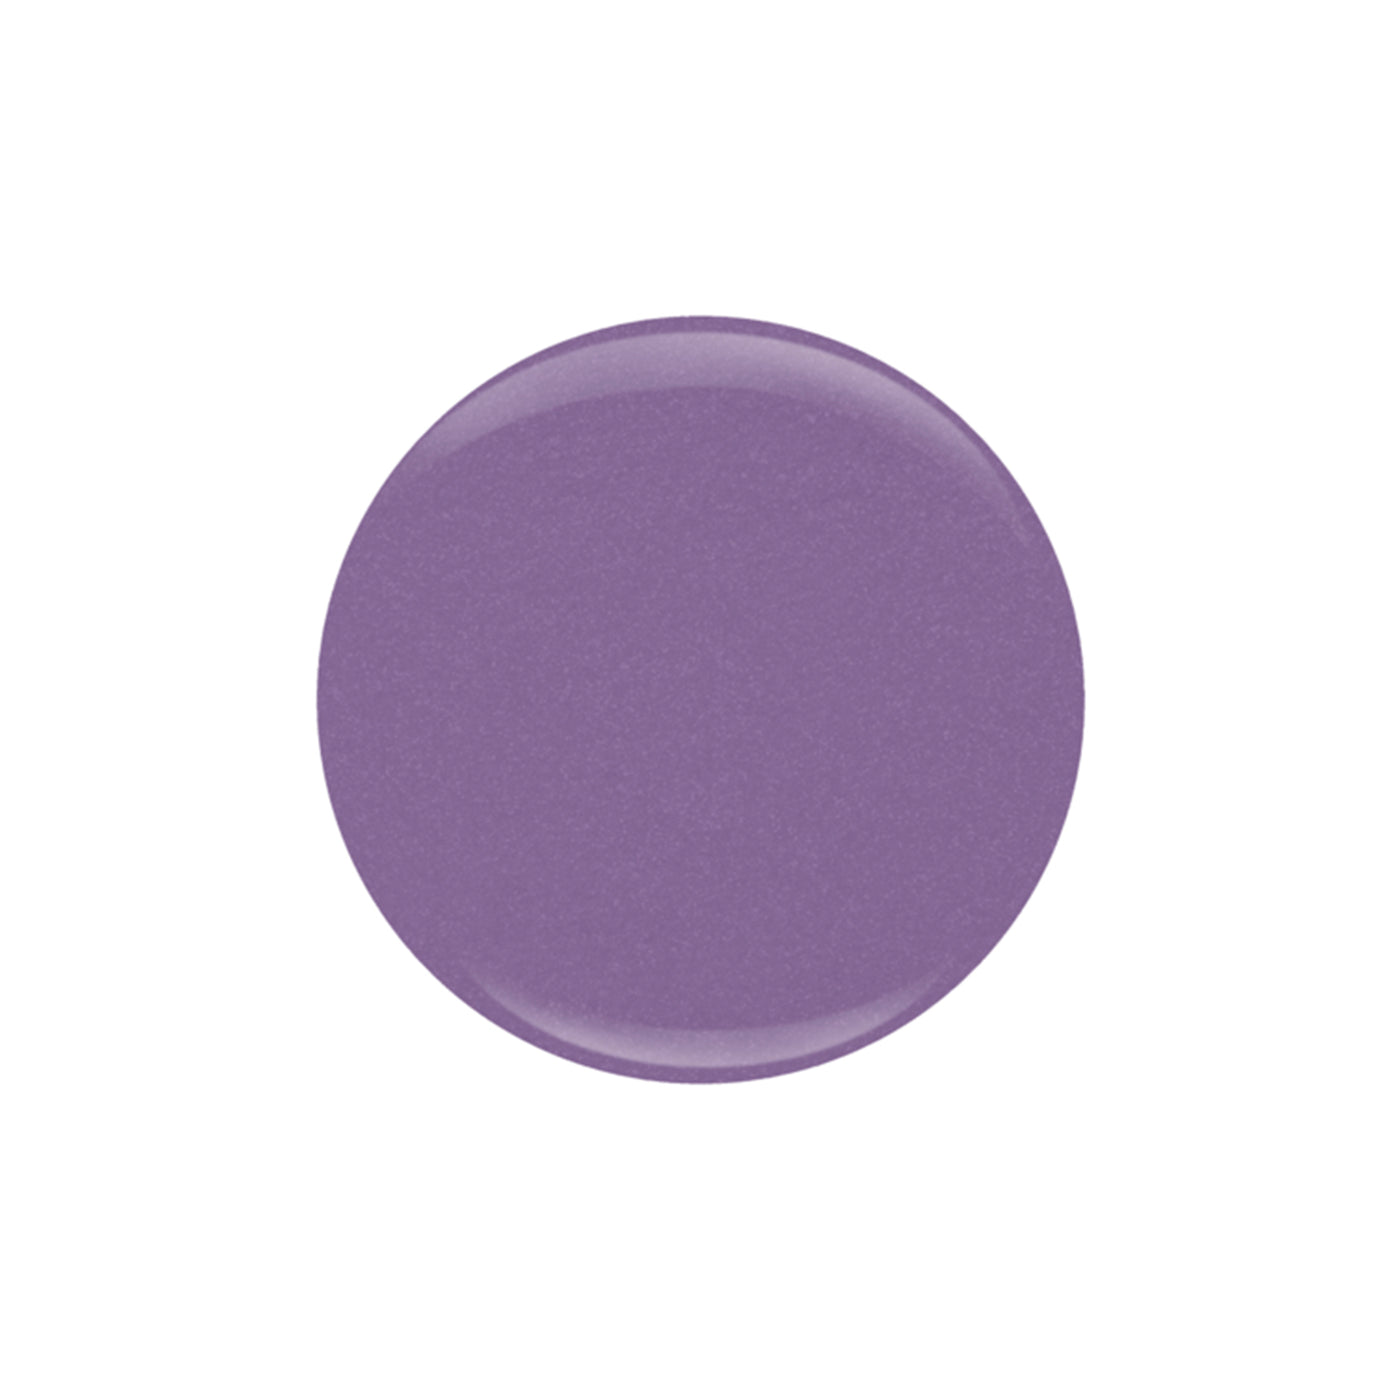 Professional manicure Entity Purple Sunglasses - Medium Orchid Crème- Eocc Soak Off Gel Polish